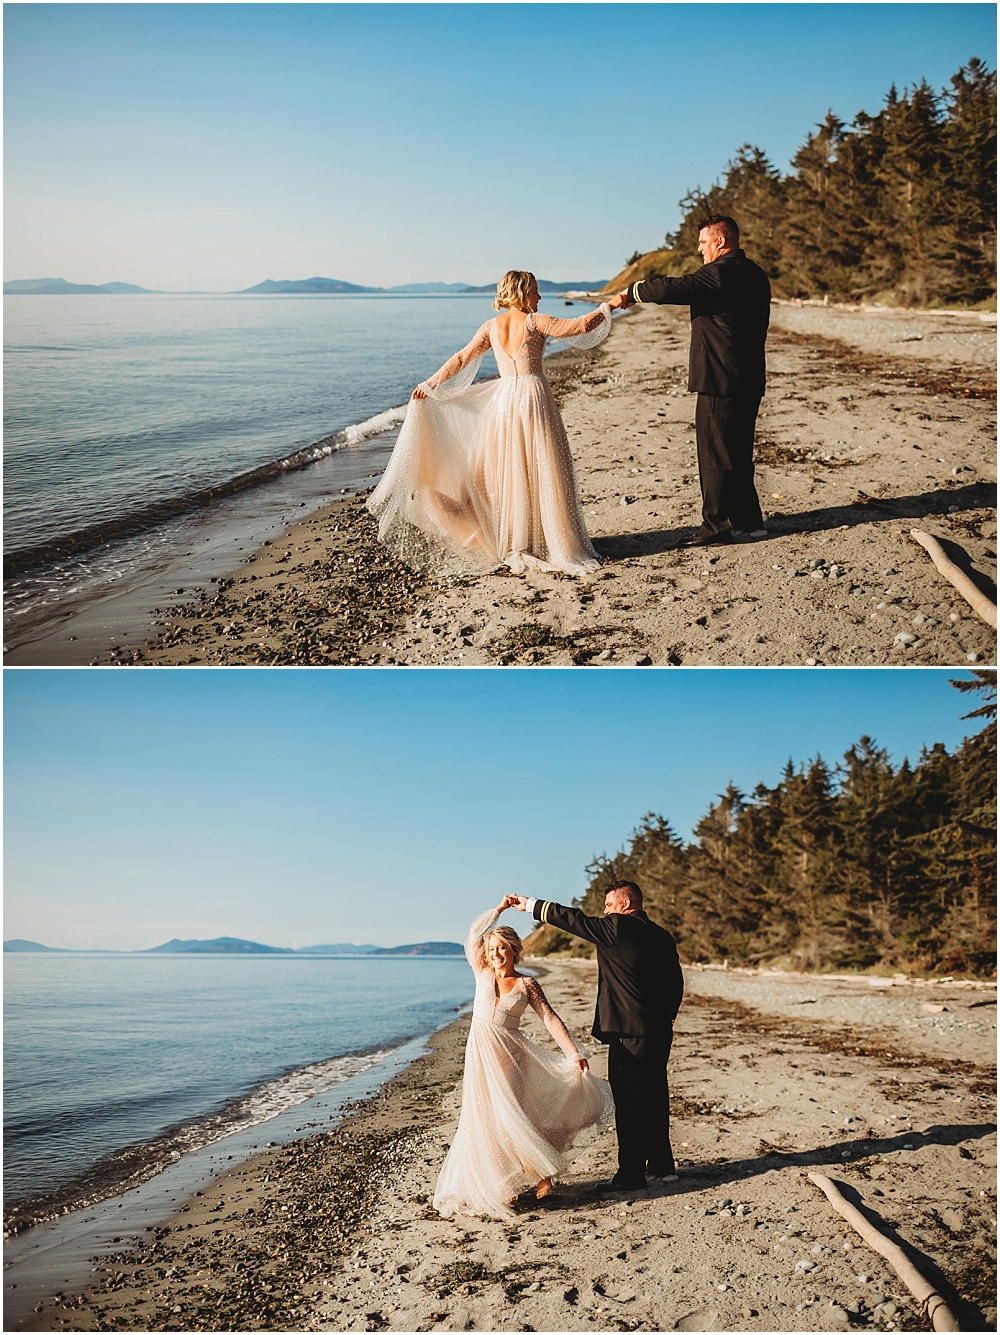 Bride and groom dance on the beach